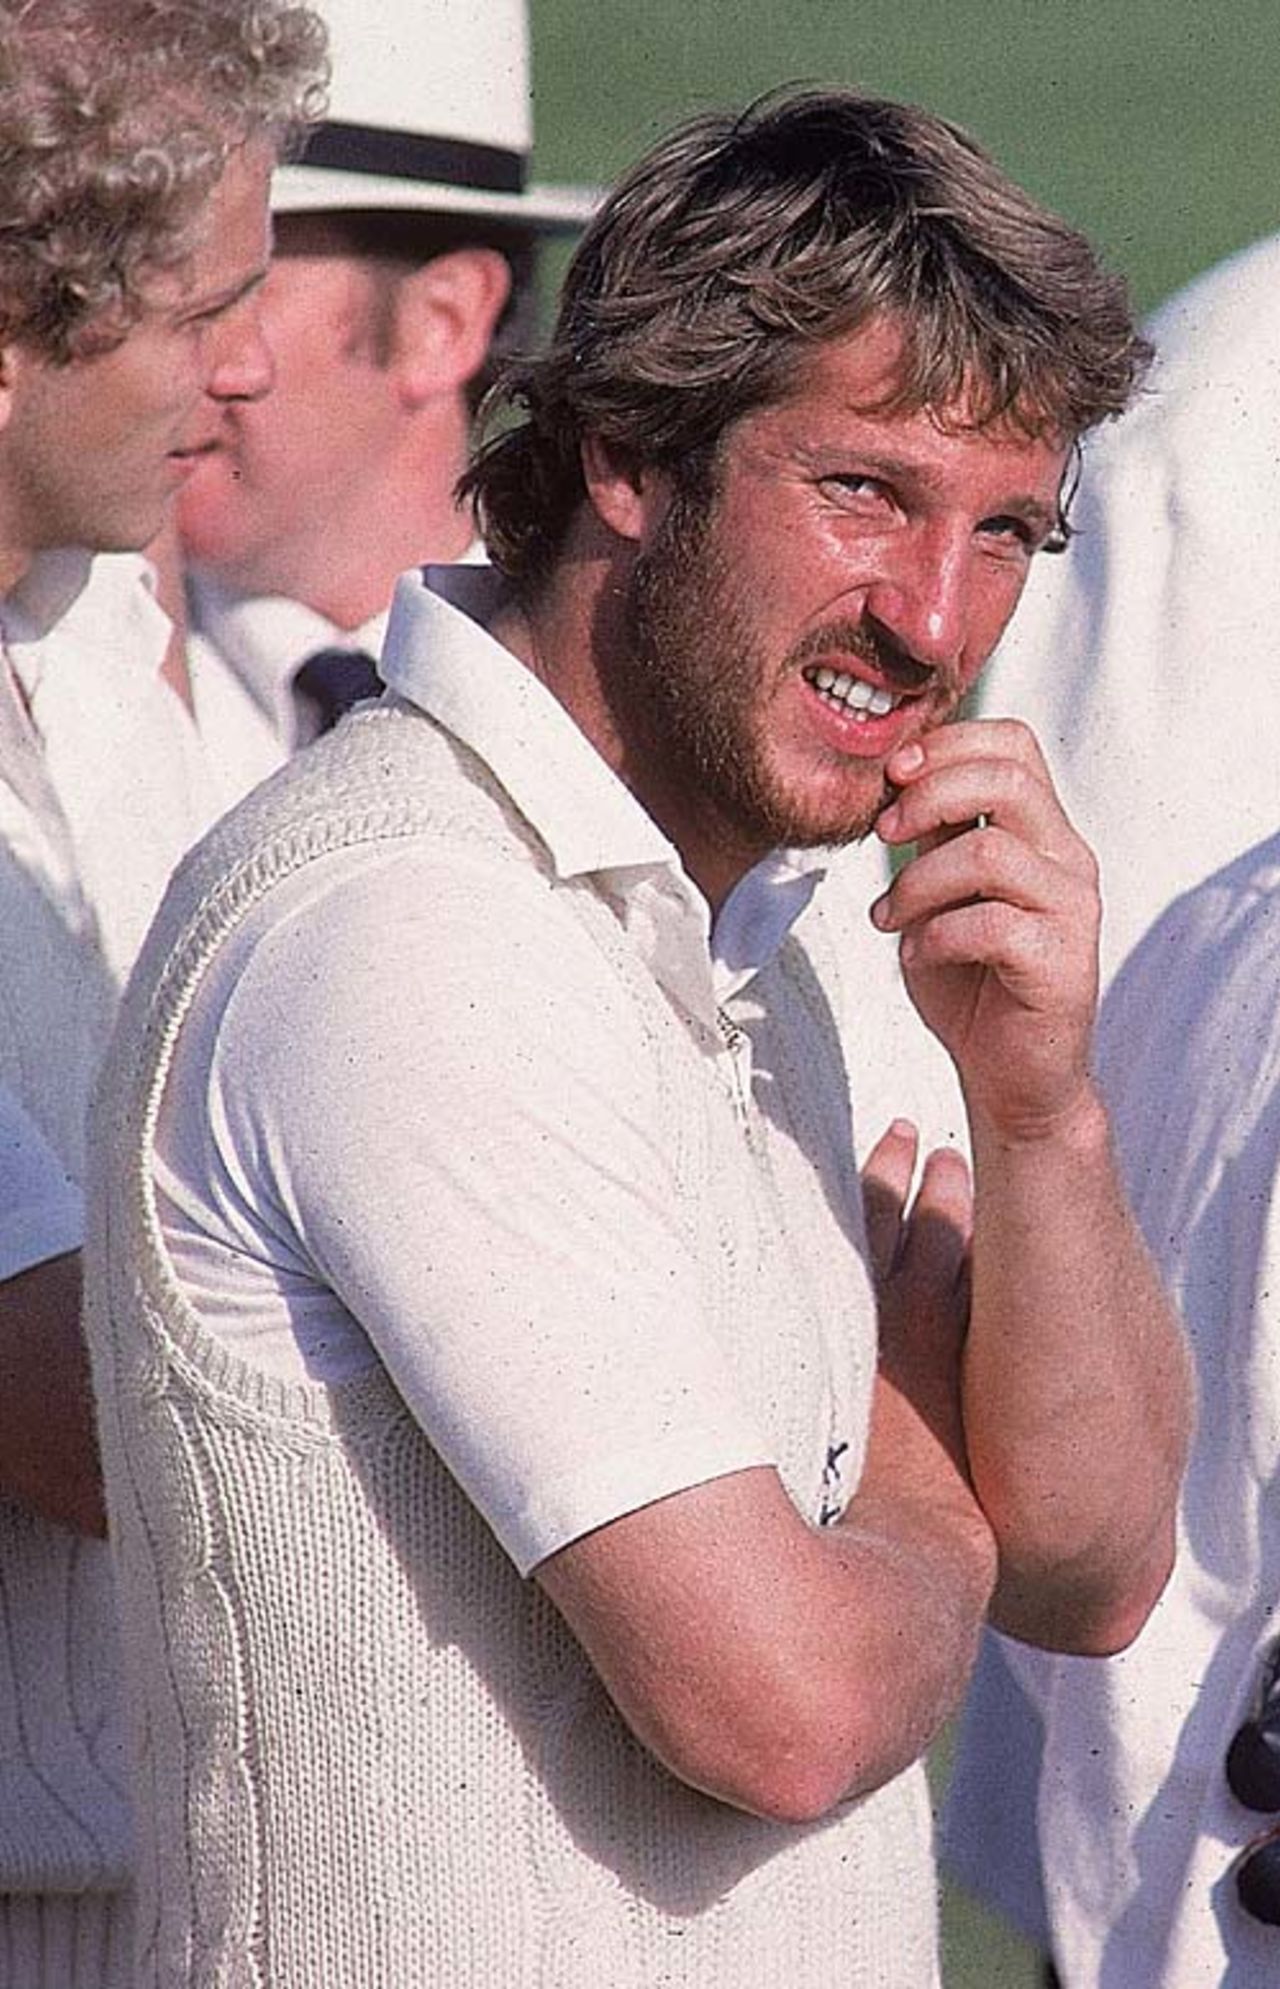 A pensive Ian Botham following England's defeat in the first Test, England v Australia, Trent Bridge, June 21, 1981